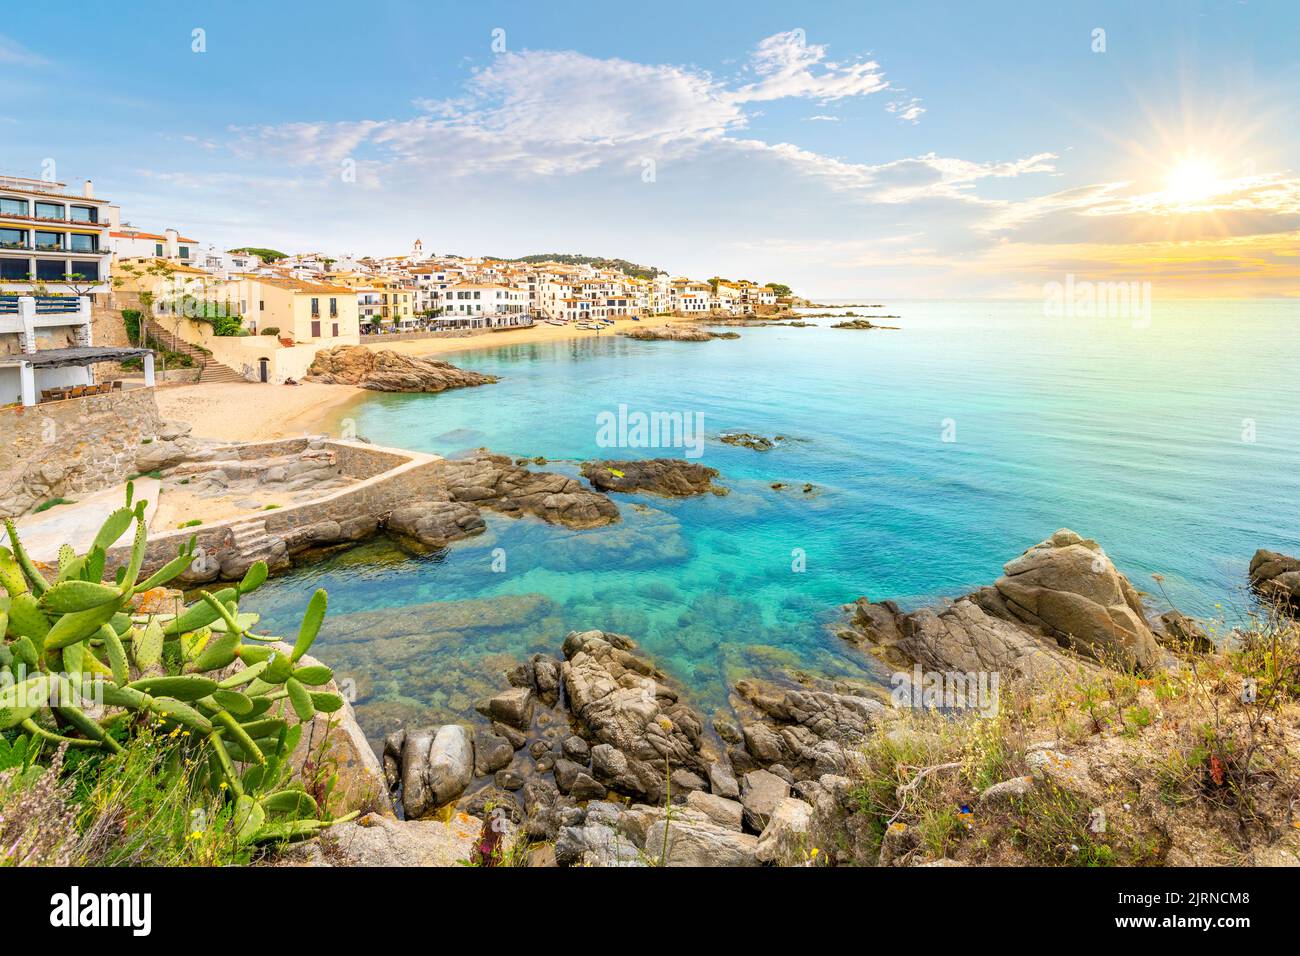 The rocky coast, sandy beach and whitewashed fishing village of Calella de Palafrugell, Spain on the Costa Brava Spanish coast. Stock Photo